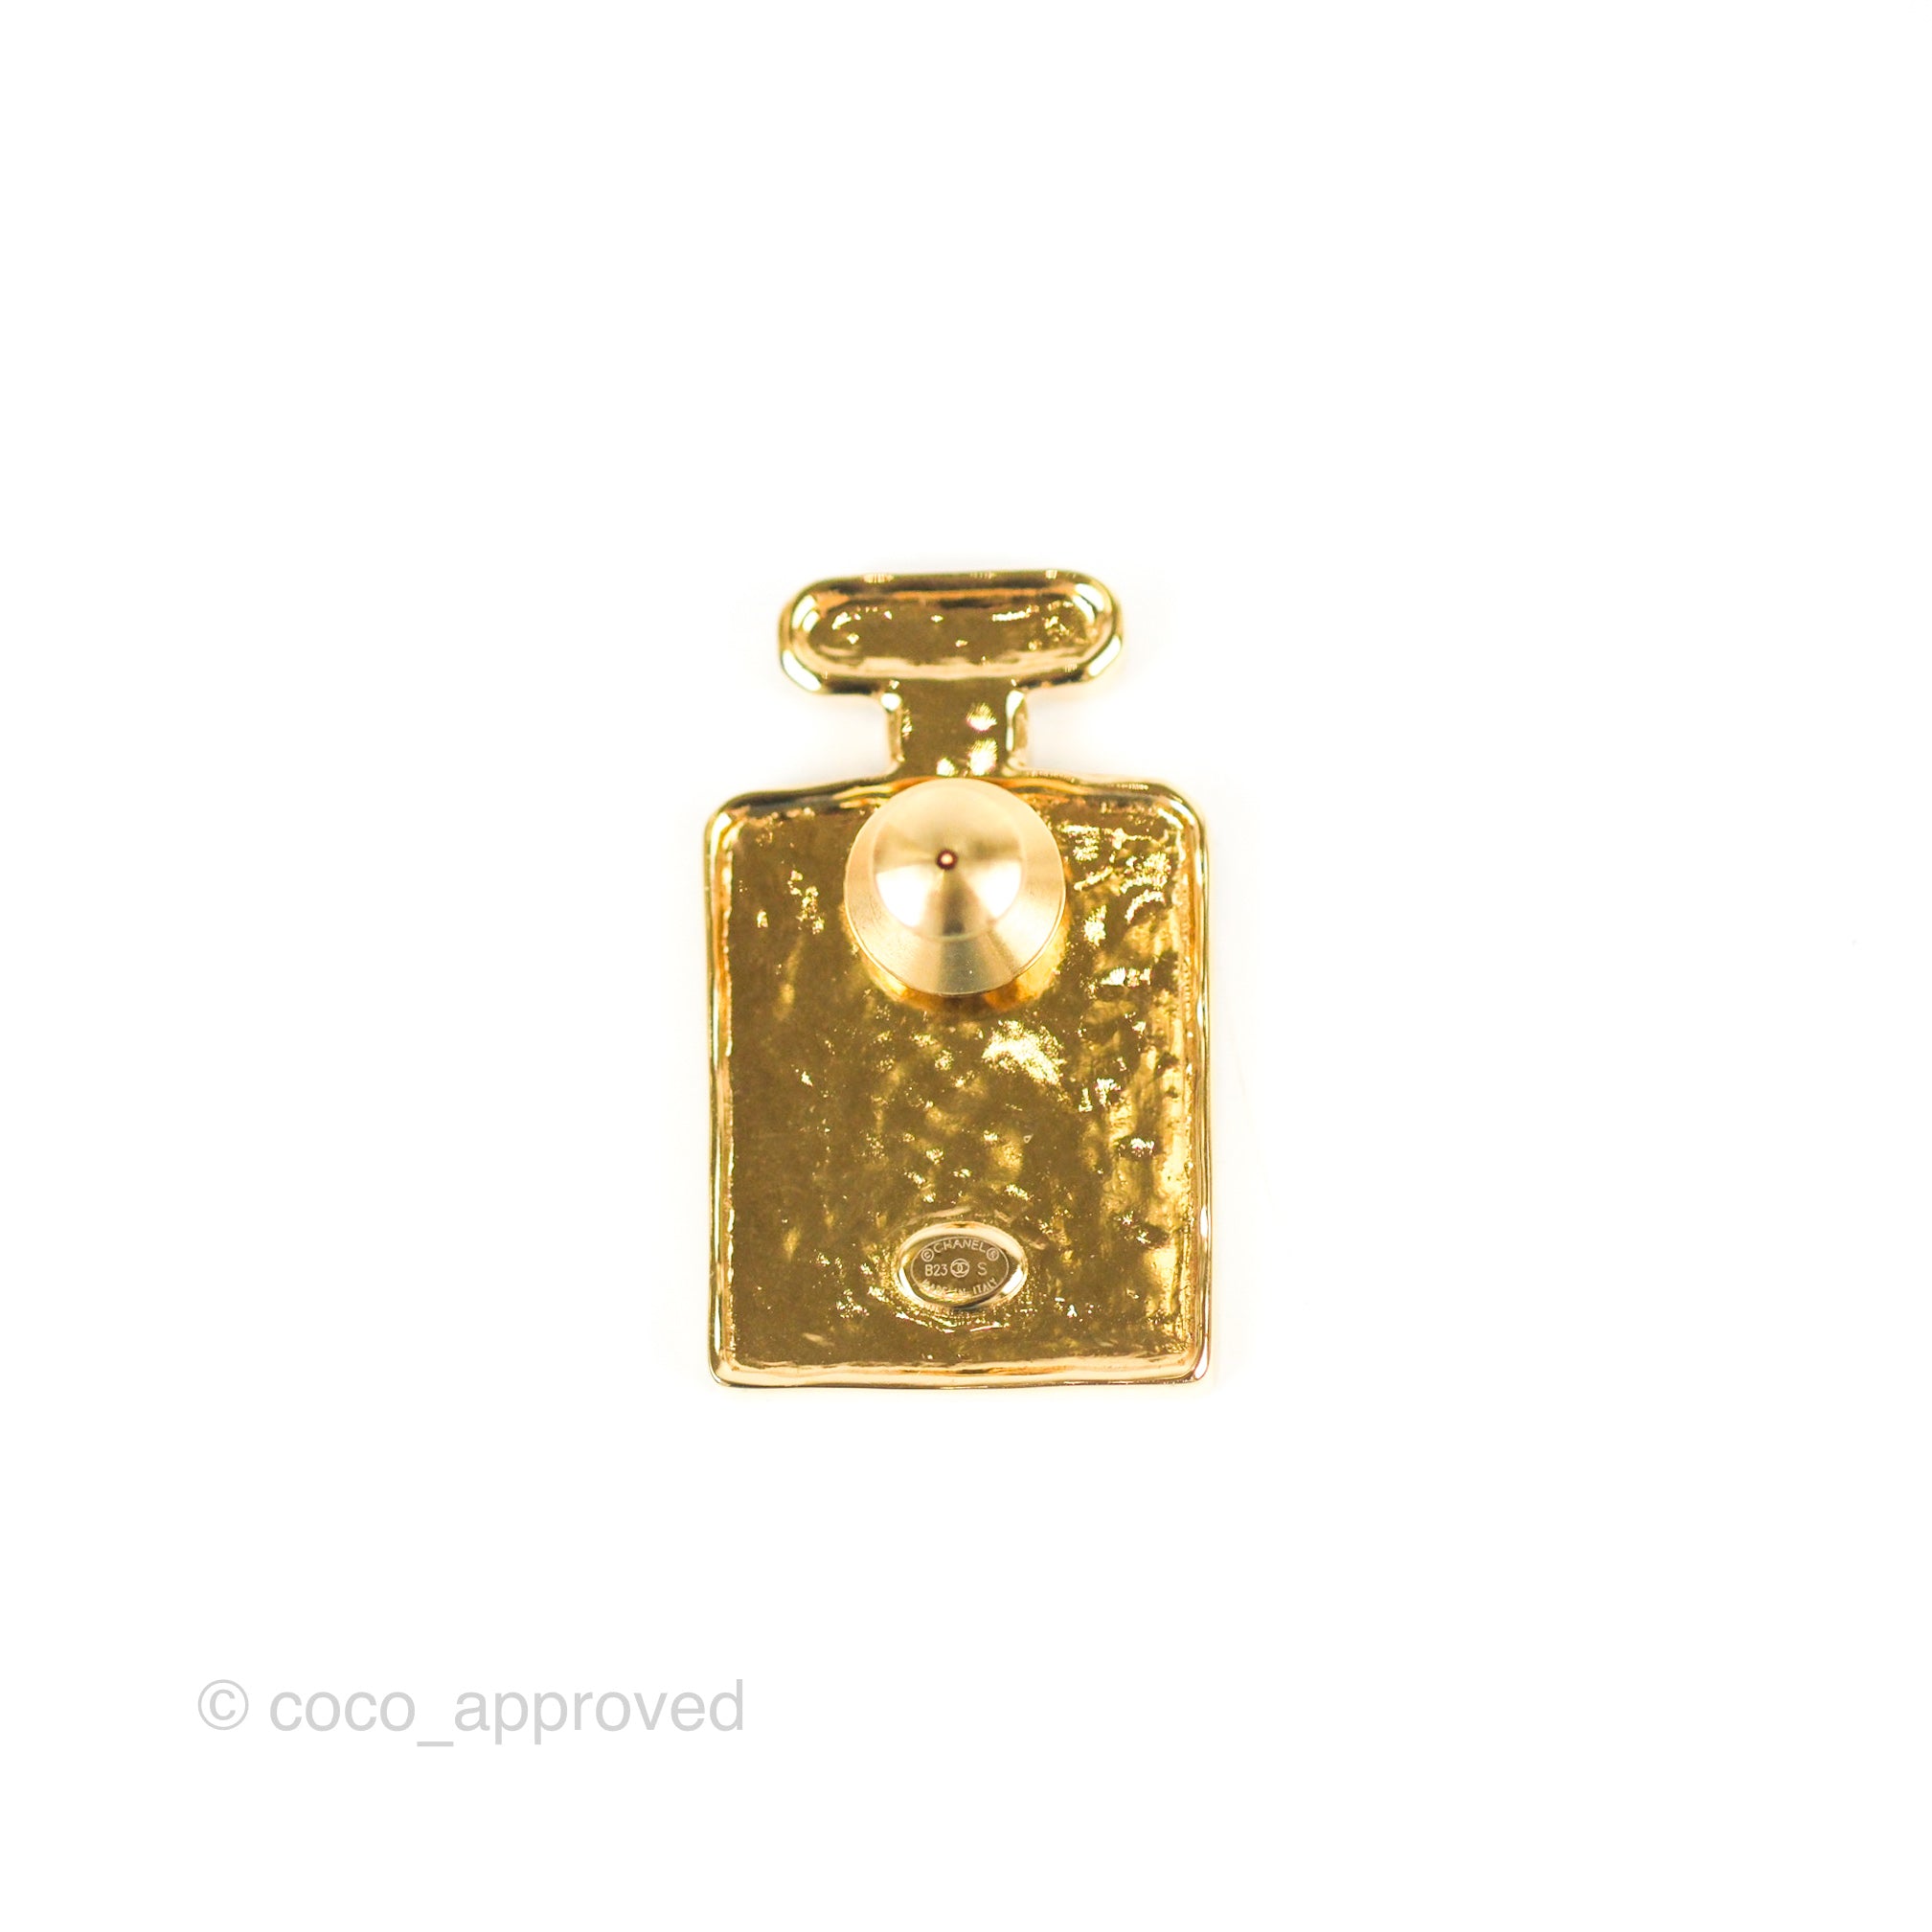 Chanel Pin Brooch Vintage Coco No.5 Bottle Perfume